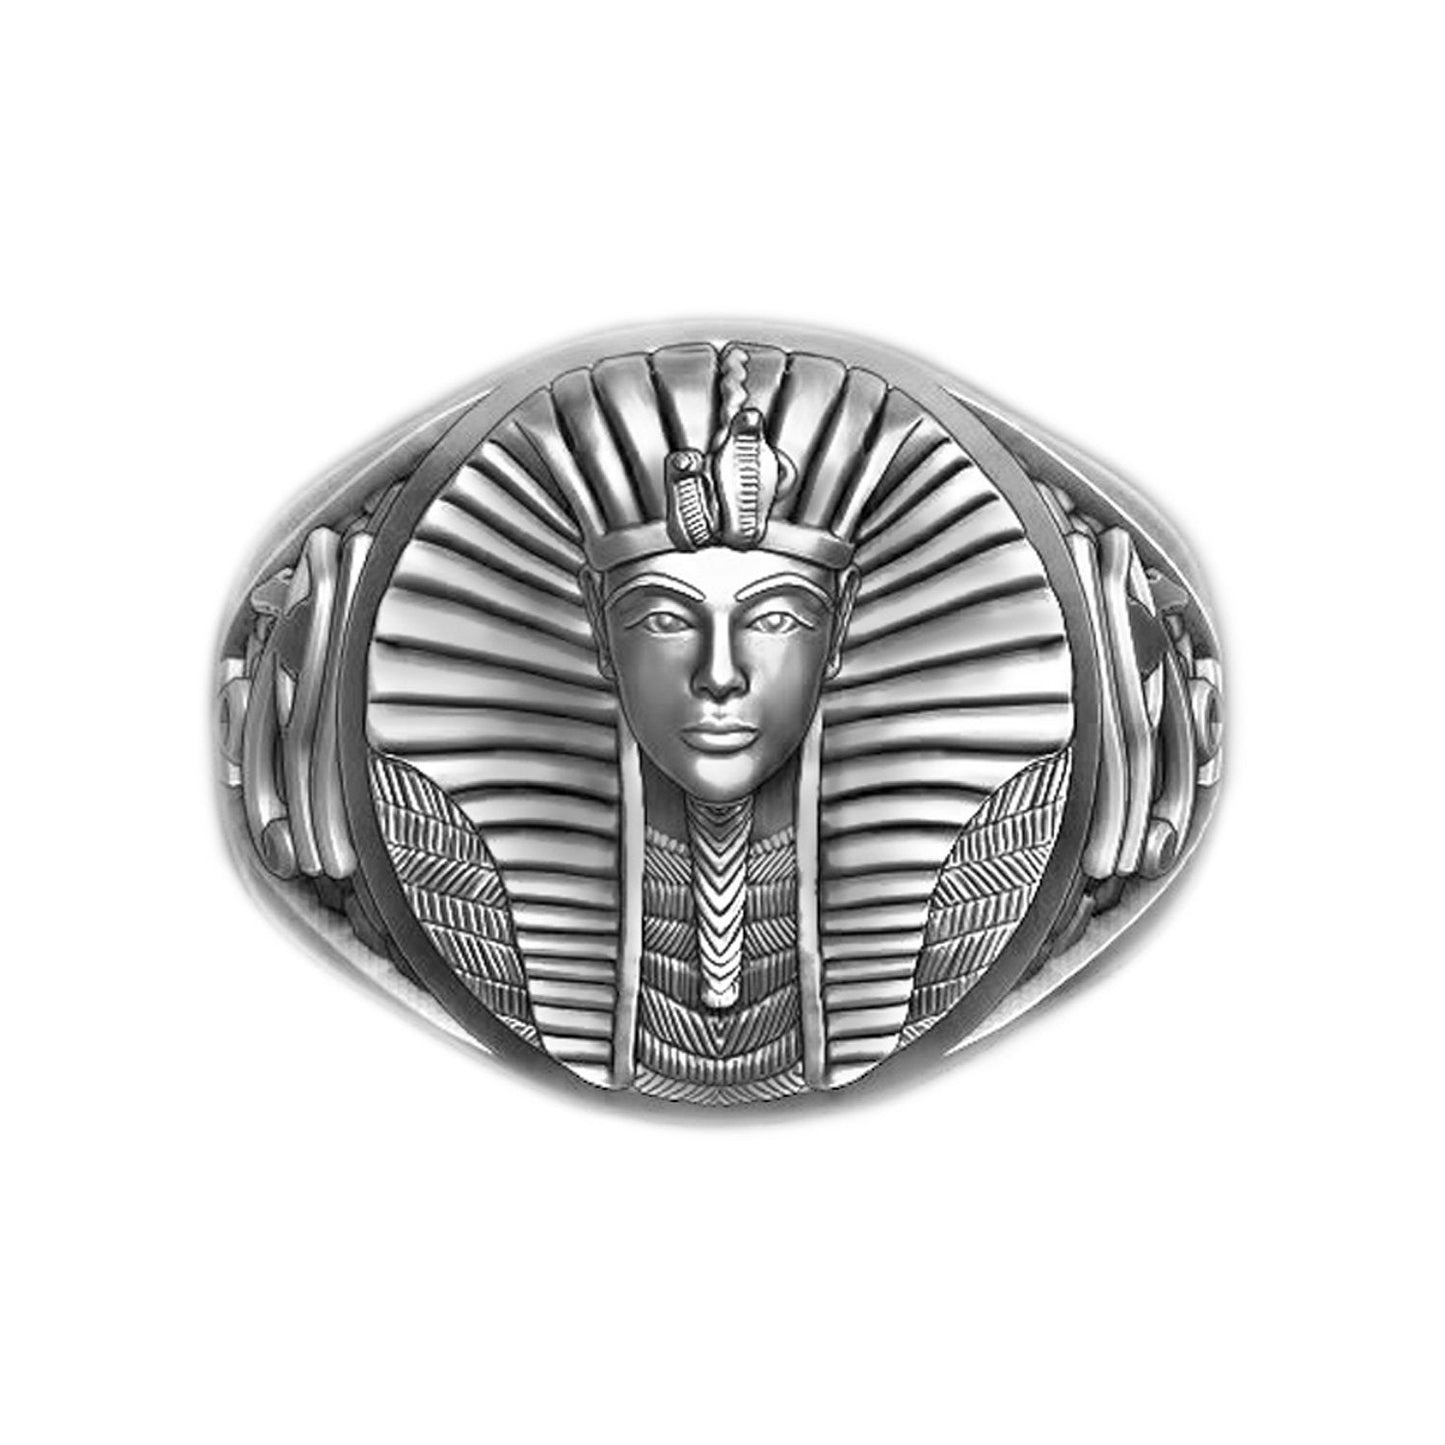 Tutanchamun Pharaoh, Ancient Egypt, Women's Round Top Ring Sterling Silver 925